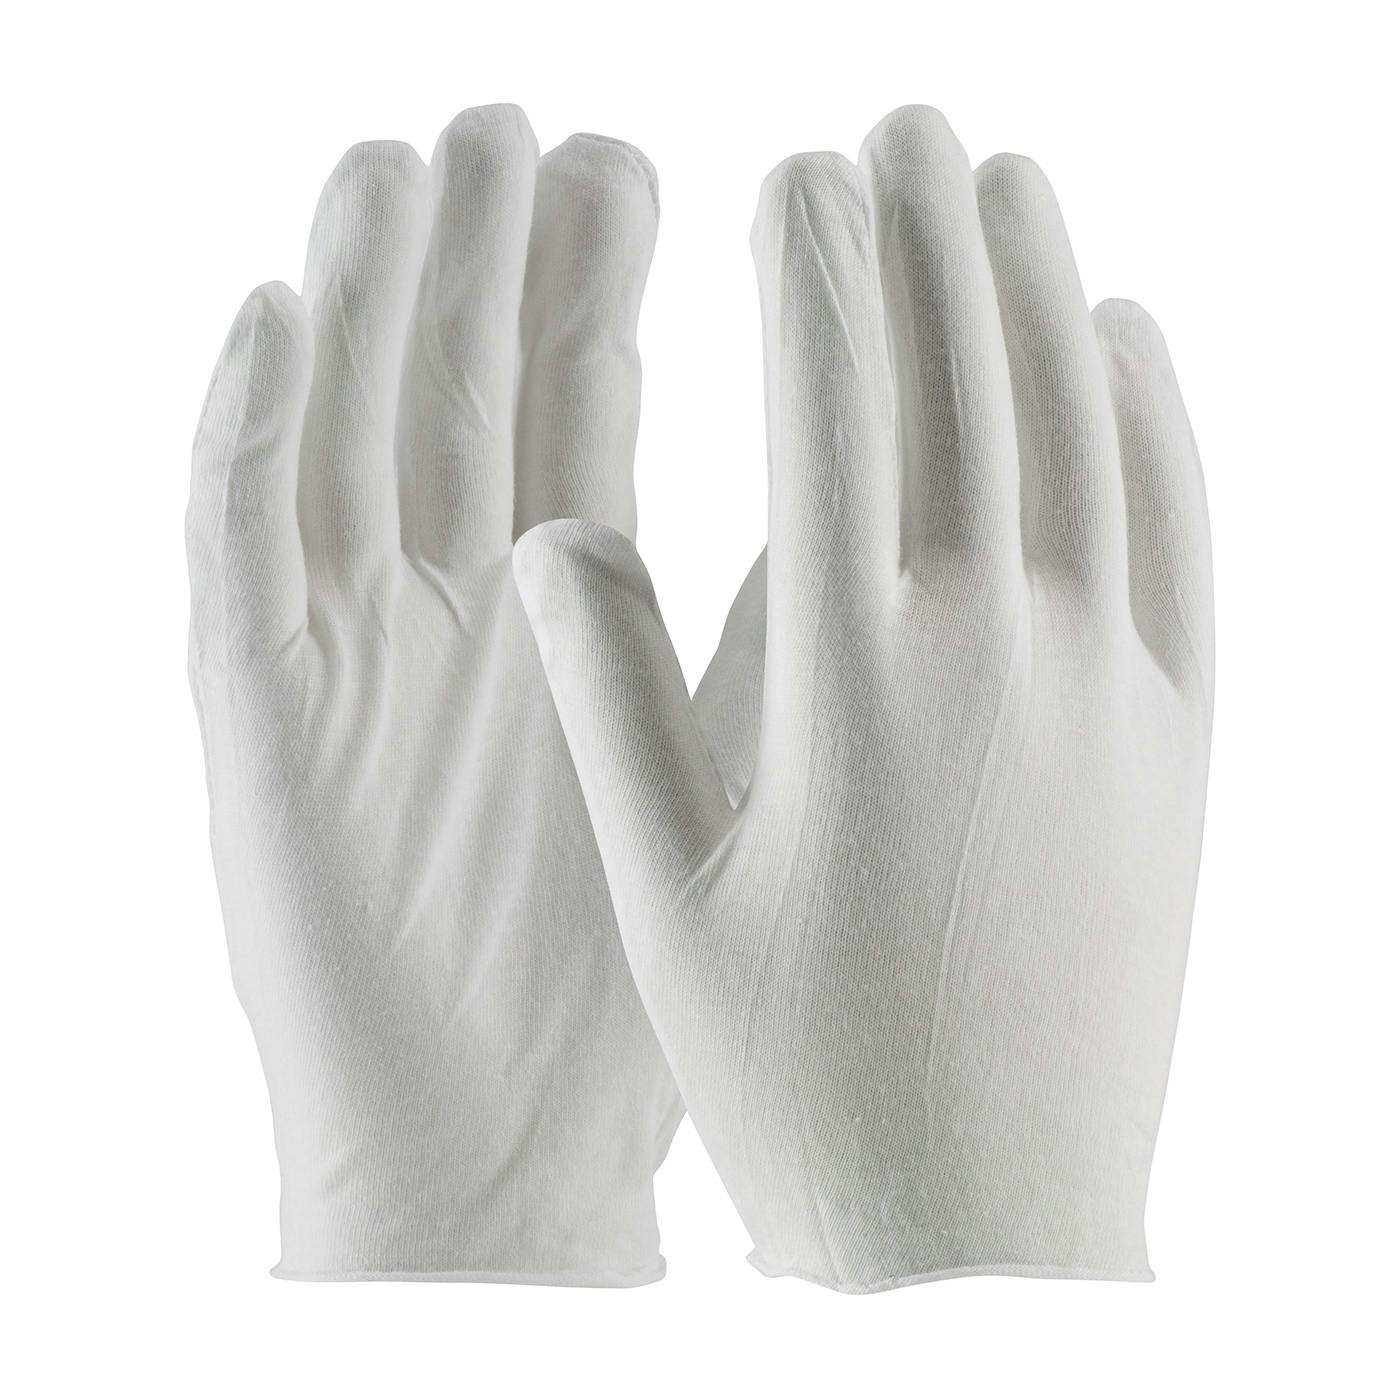 Premium, Light Weight Cotton Lisle Inspection Glove with Unhemmed Cuff - Men's, White (97-500) - MENS